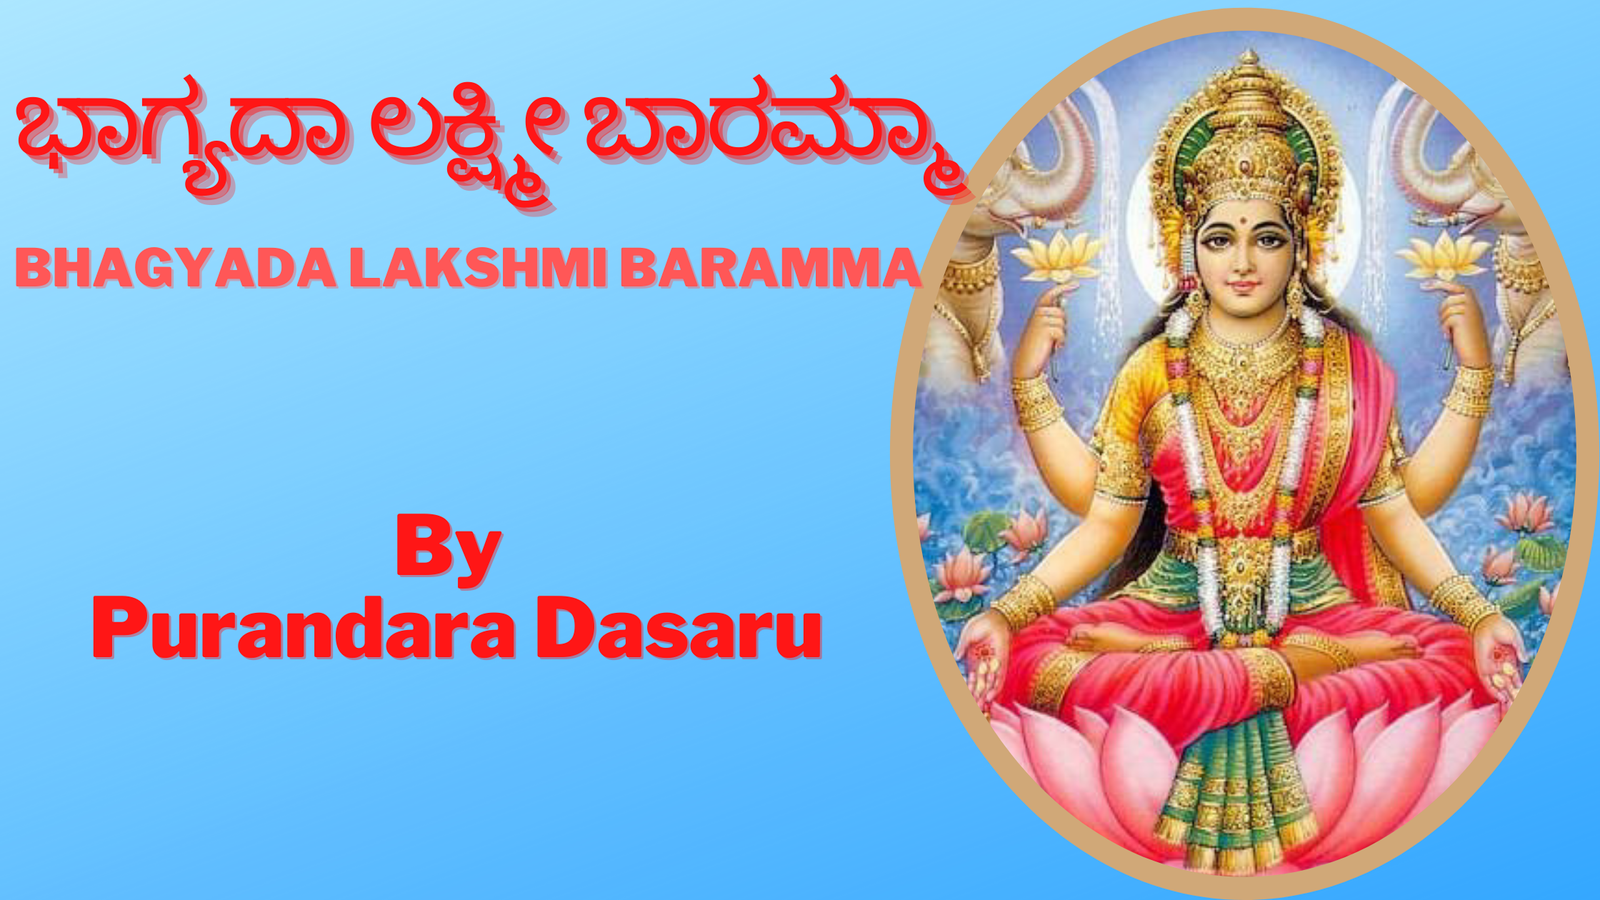 bhagyada lakshmi baramma lyrics in kannada pdf